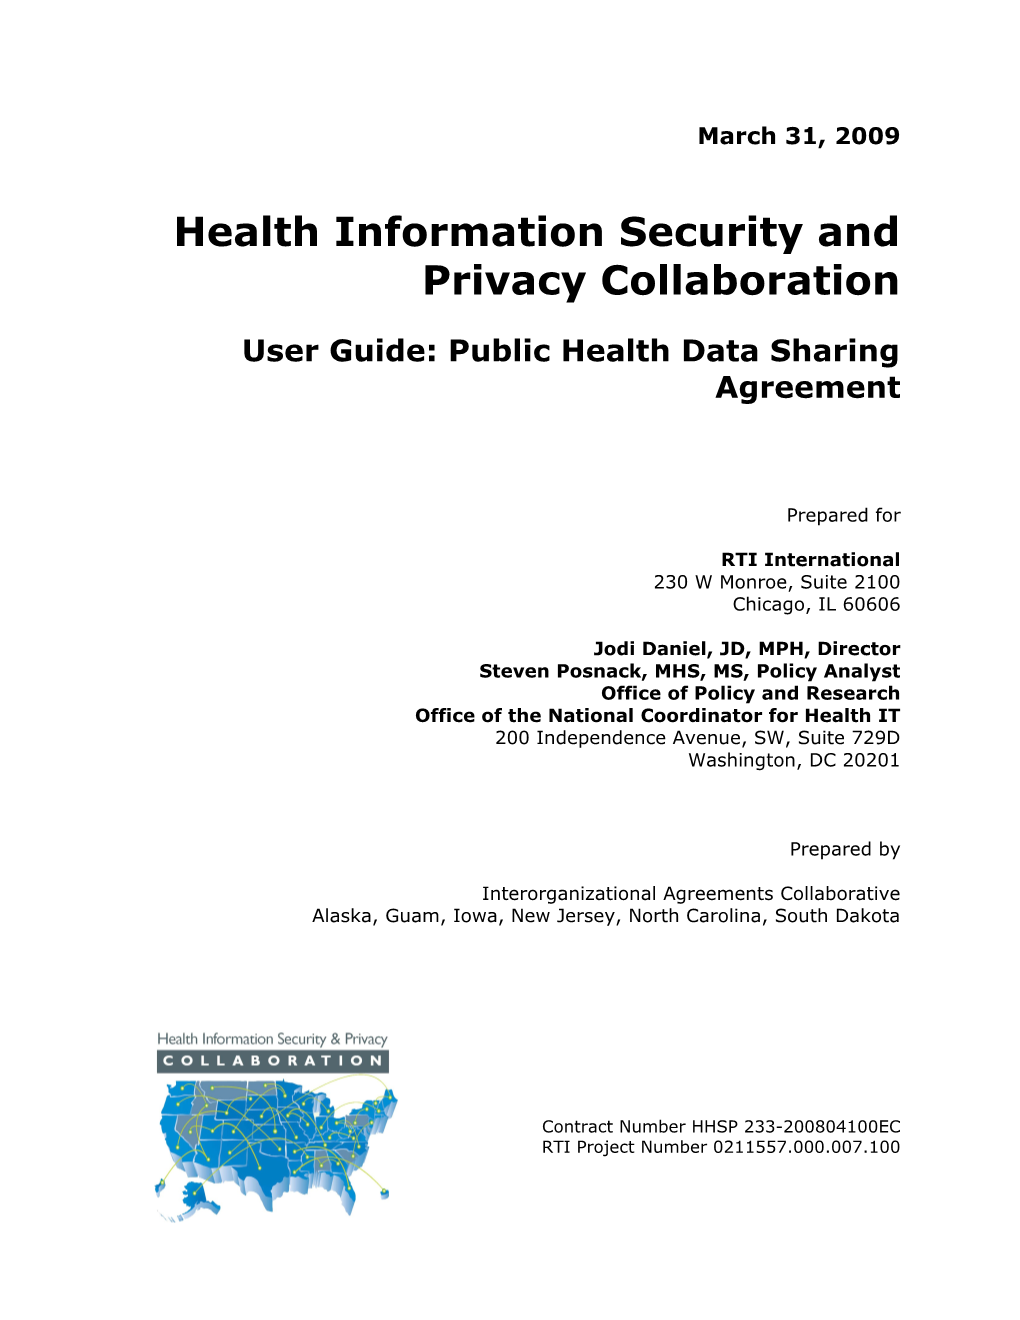 User Guide: Public Health Data Sharing Agreement